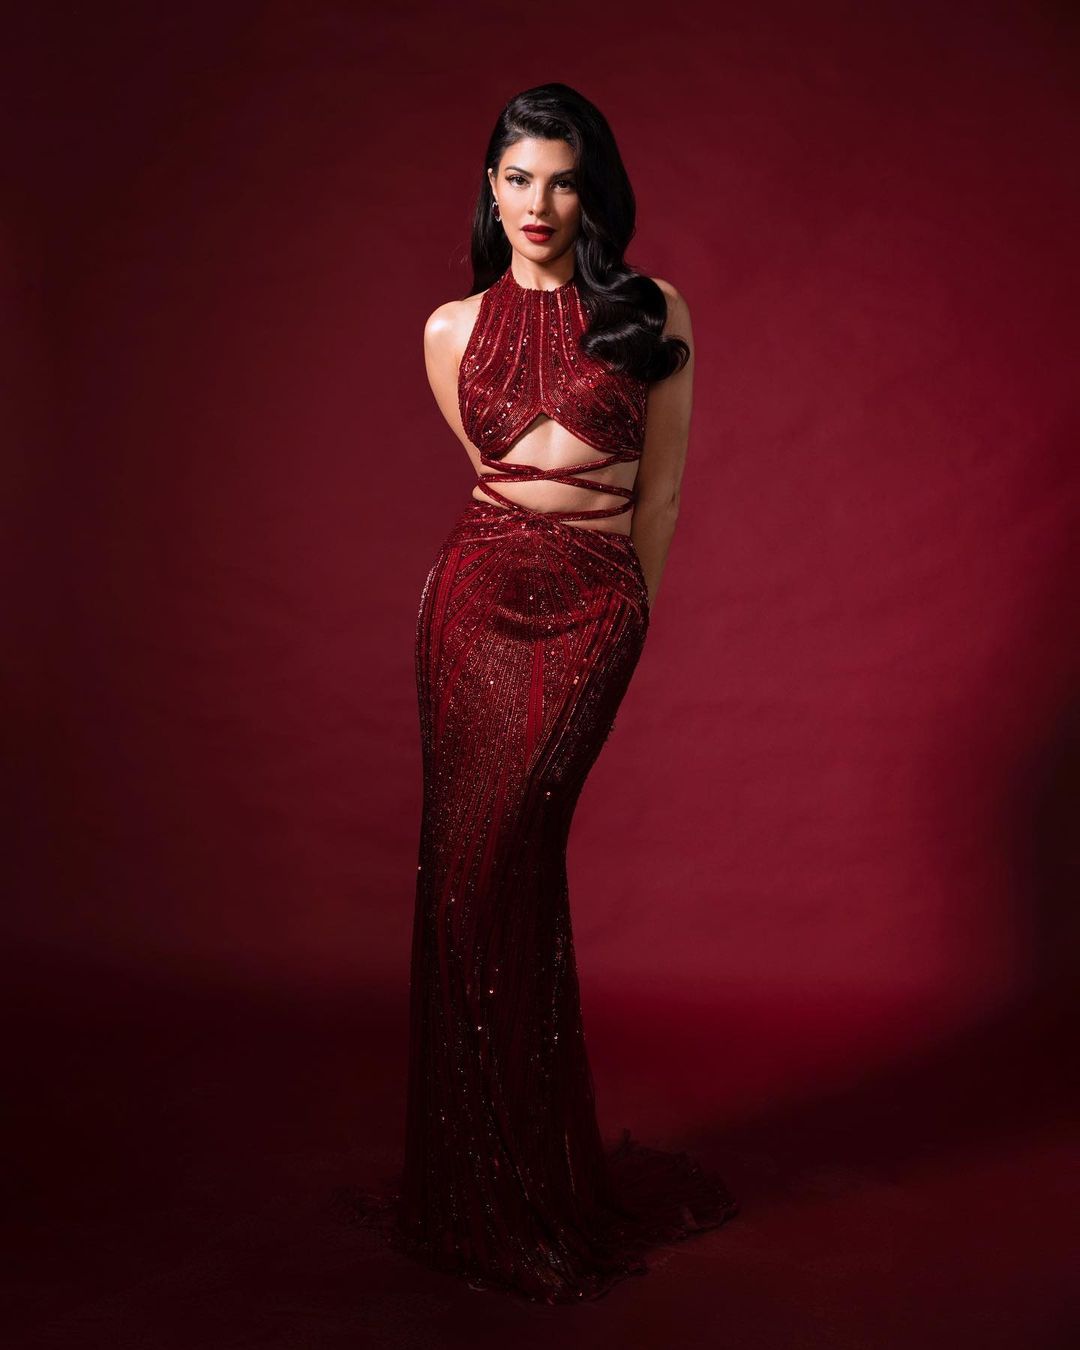 Jacqueline Fernandez stuns in scarlet red gown for Filmfare photoshoot | Fashion designer Bhawna Rao